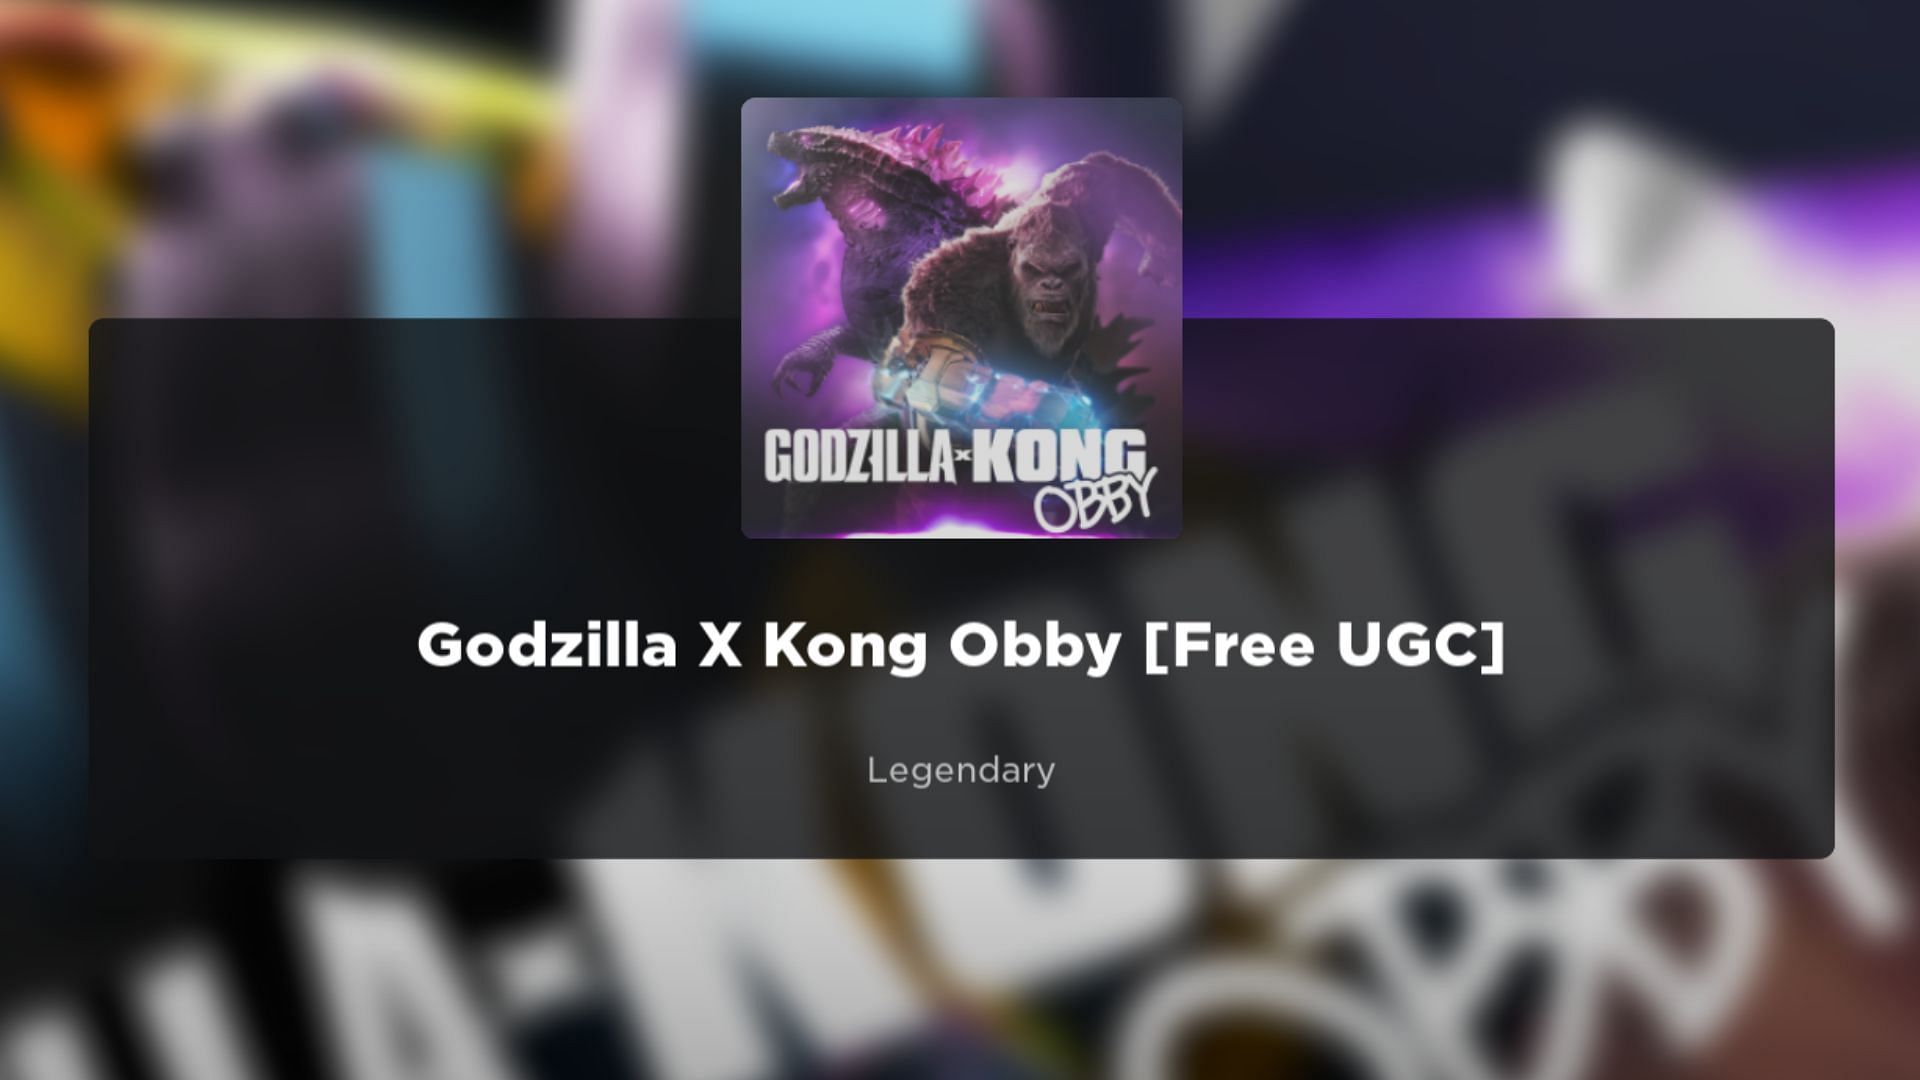 Use the active Godzilla x Kong codes to earn free Orbs